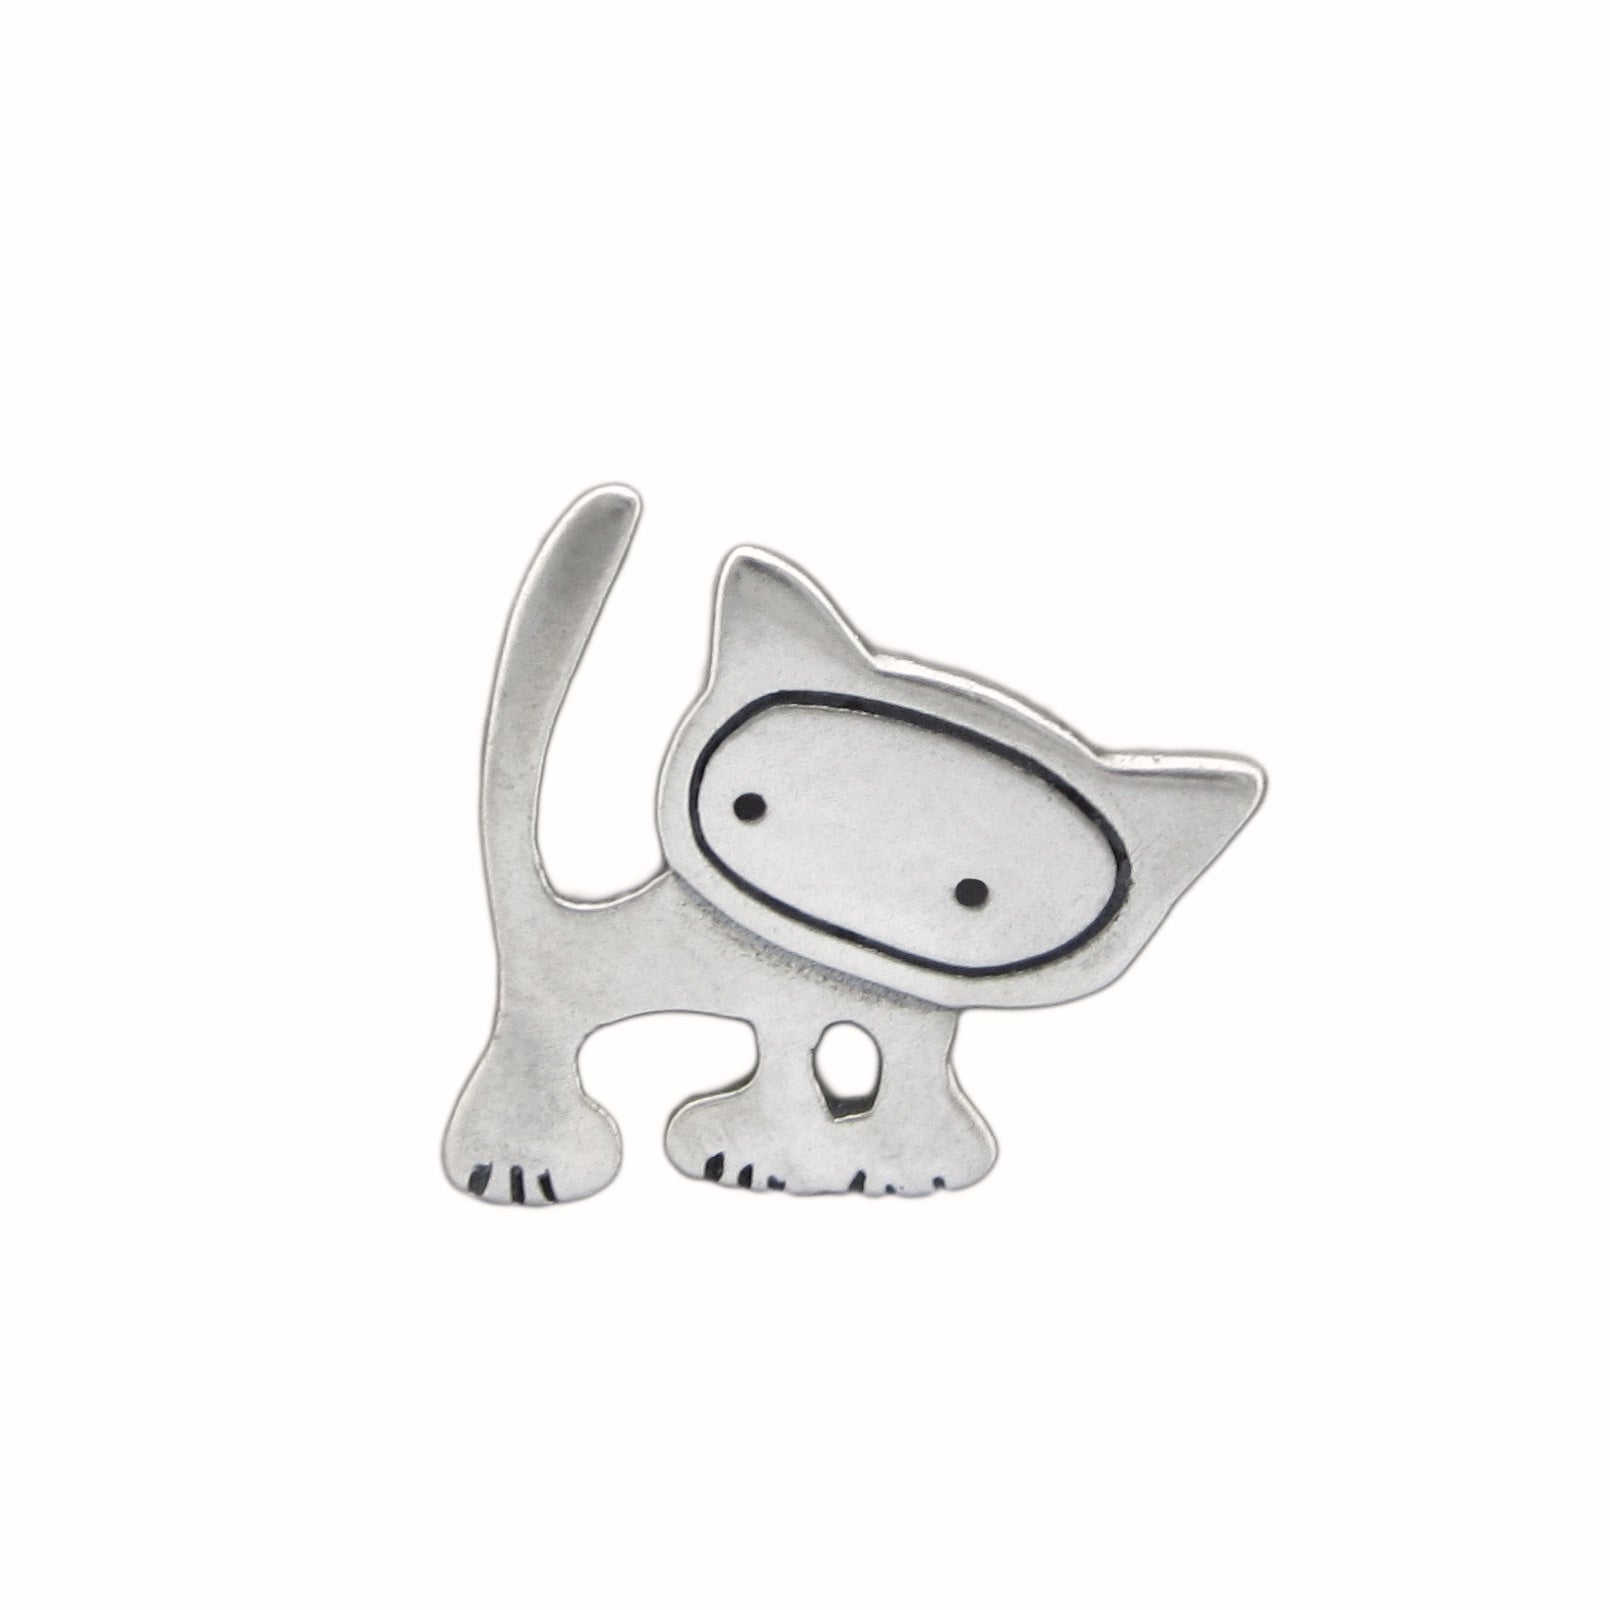 2x Cat Charms, Enamel Kitten Charms for Bracelet, Cartoon Kitten